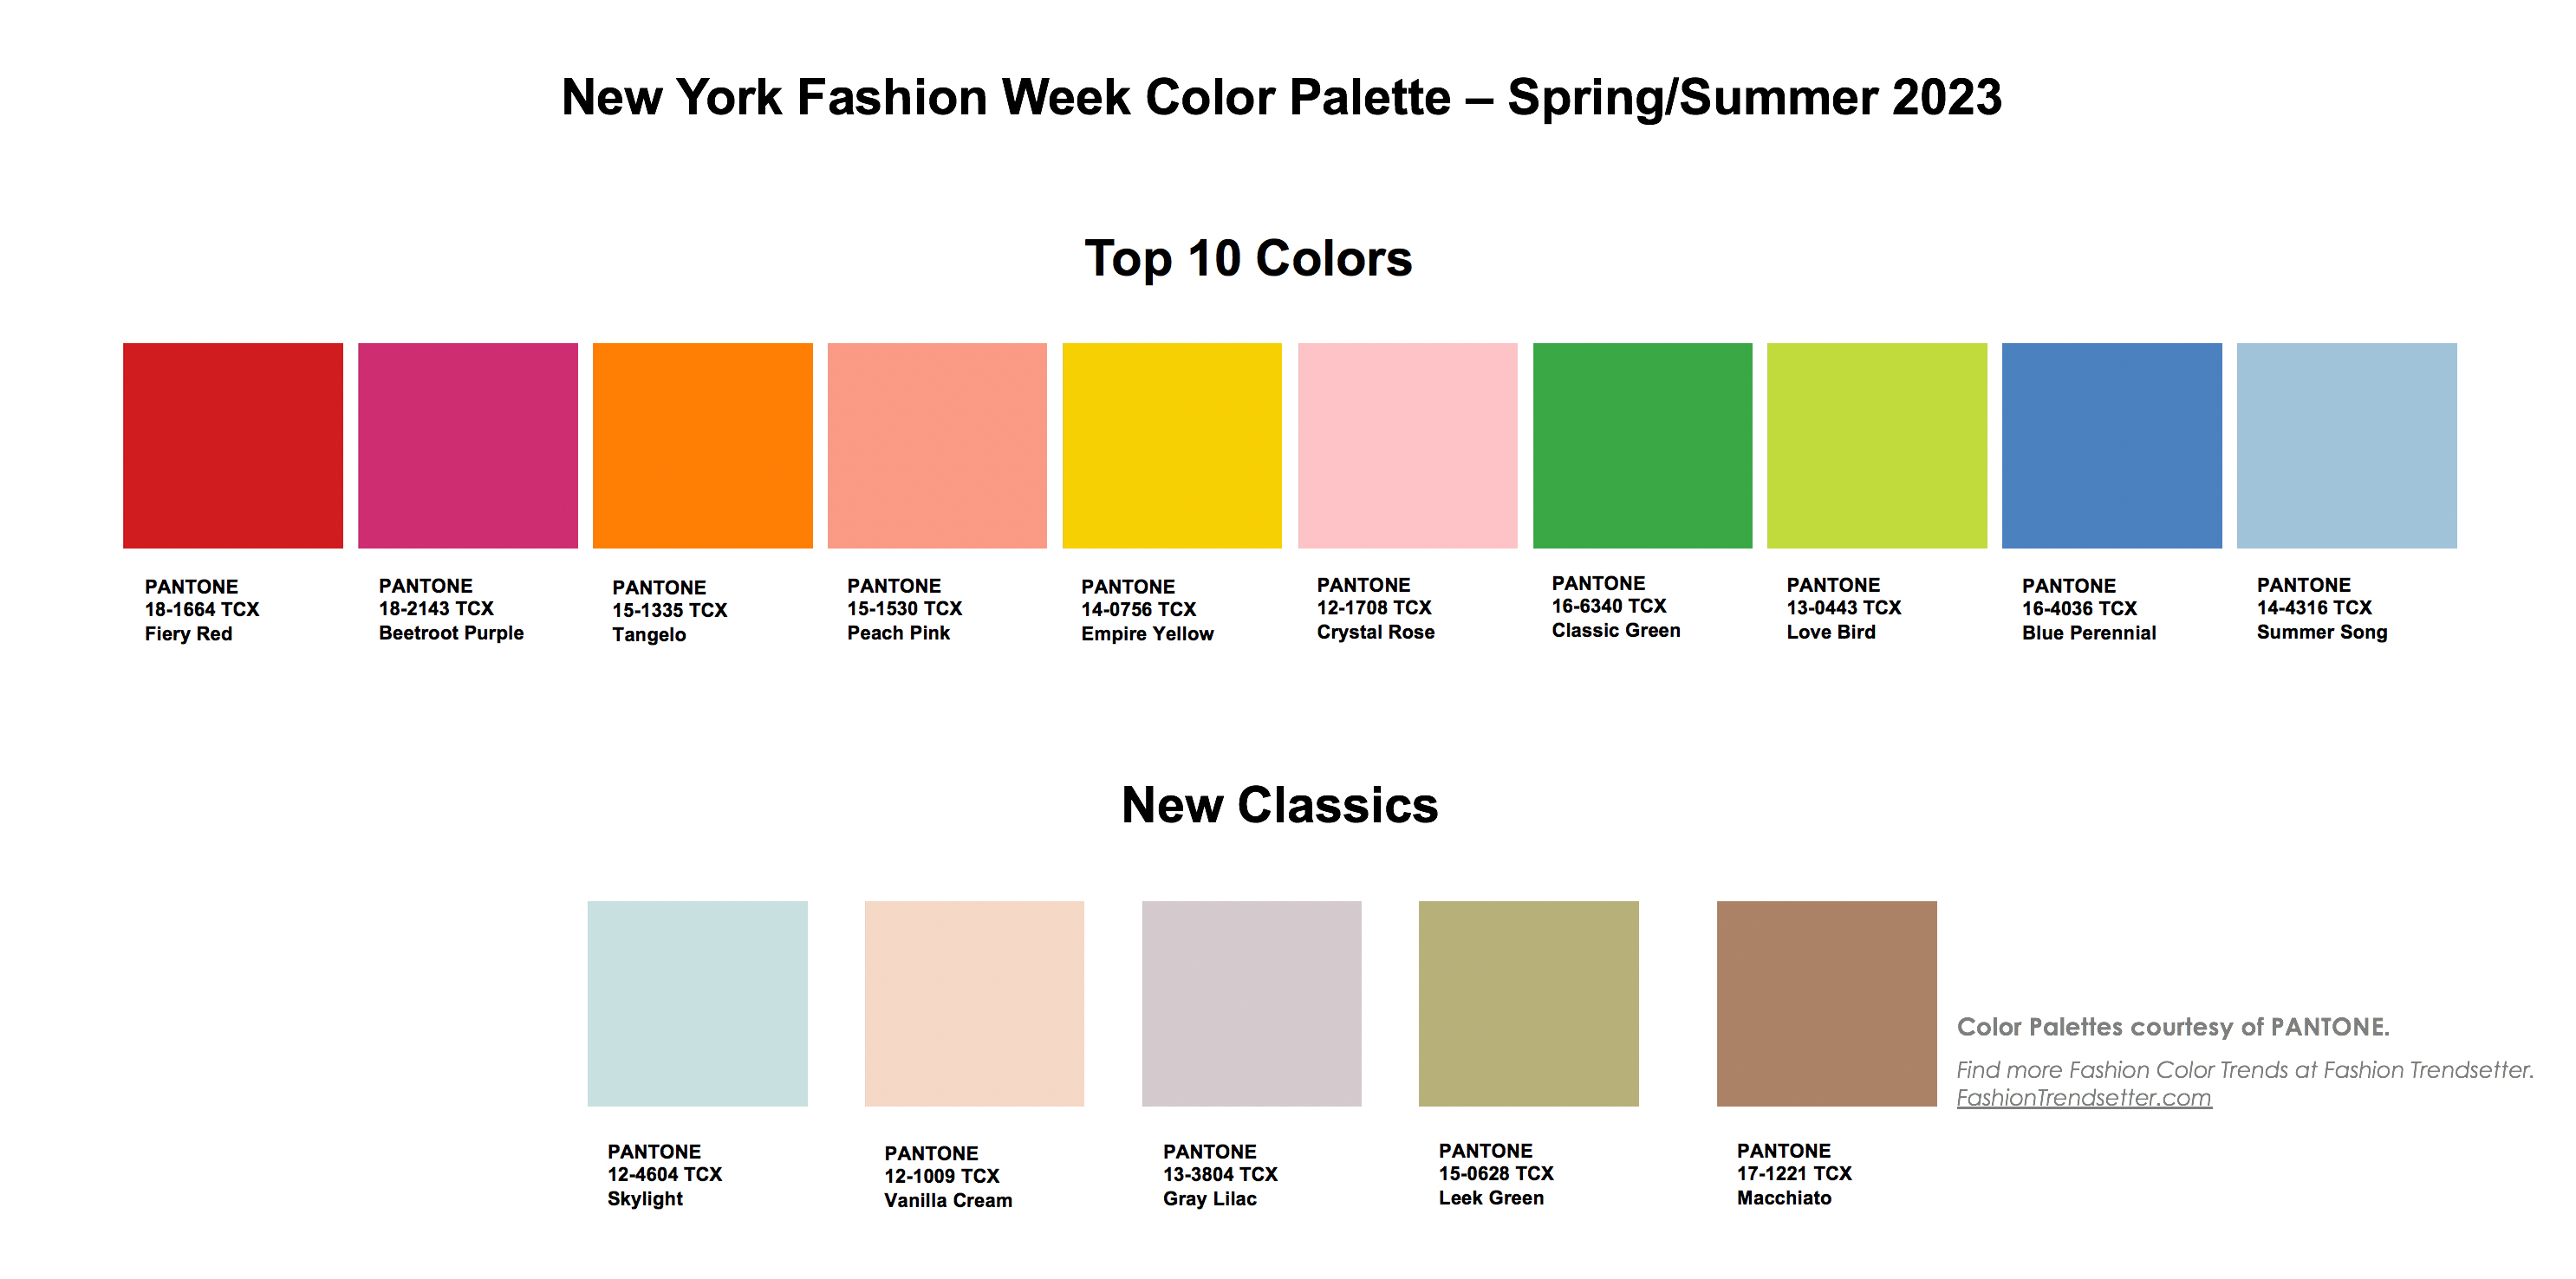 Pantone's Color Trend Forecast for Autumn/Winter 2022/2023